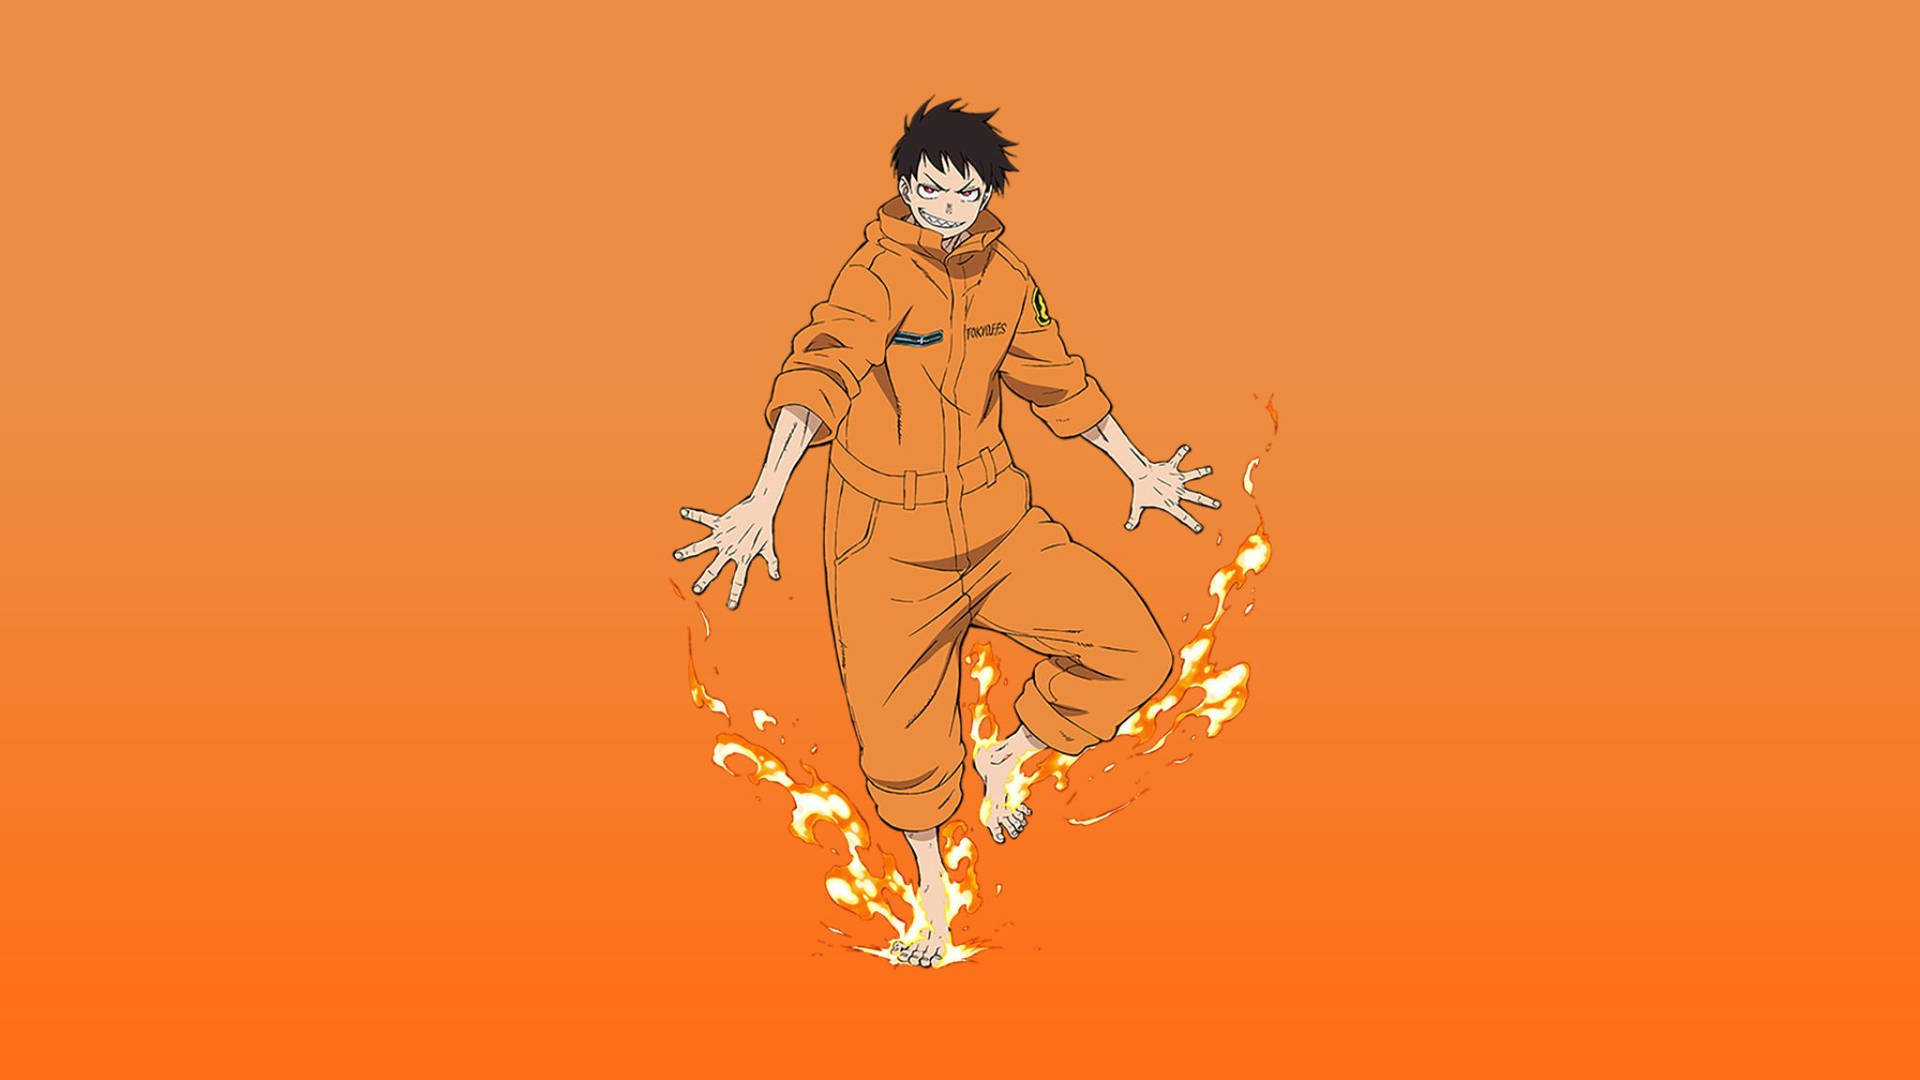 Papelde Parede Minimalista Do Anime Shinra Fire. Papel de Parede